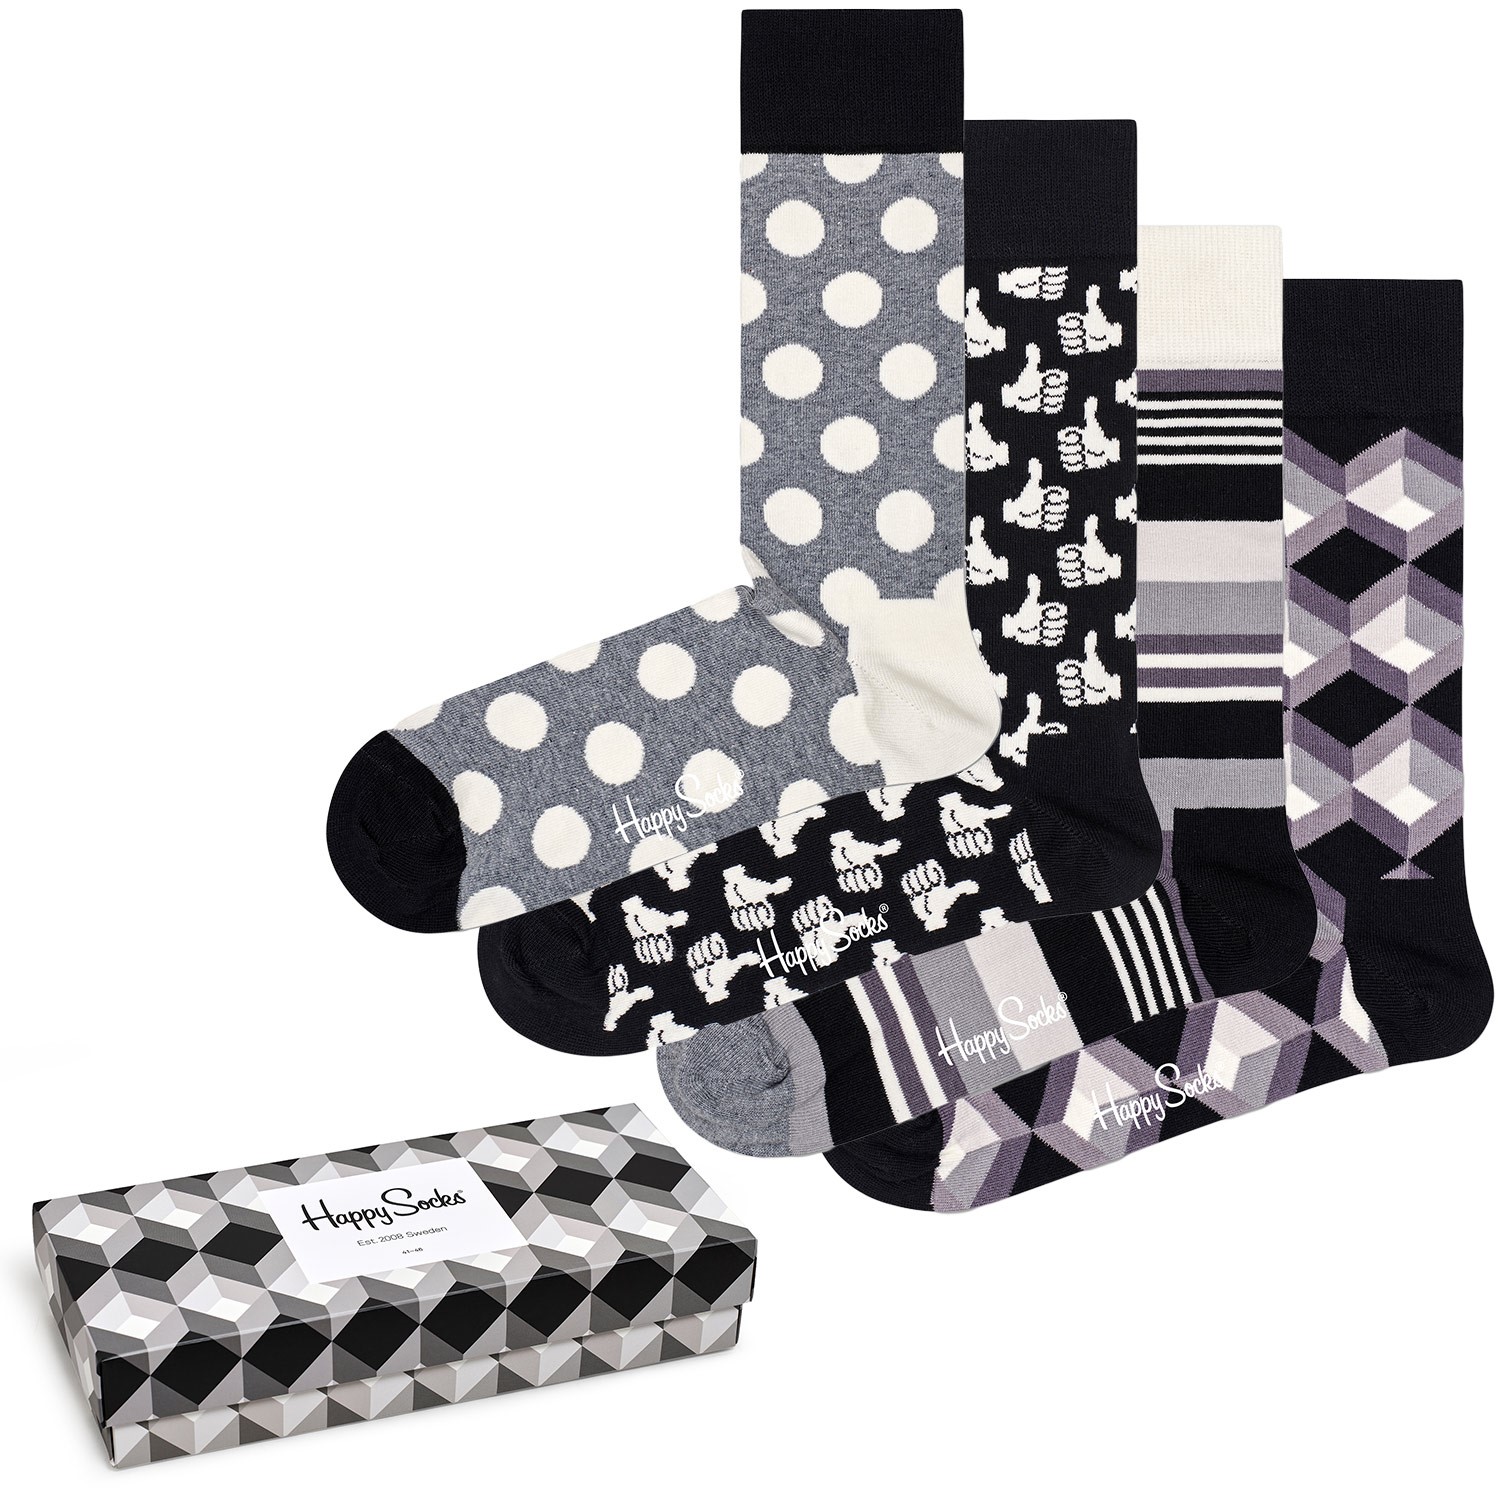 Happy Socks Black And White Gift Box 900